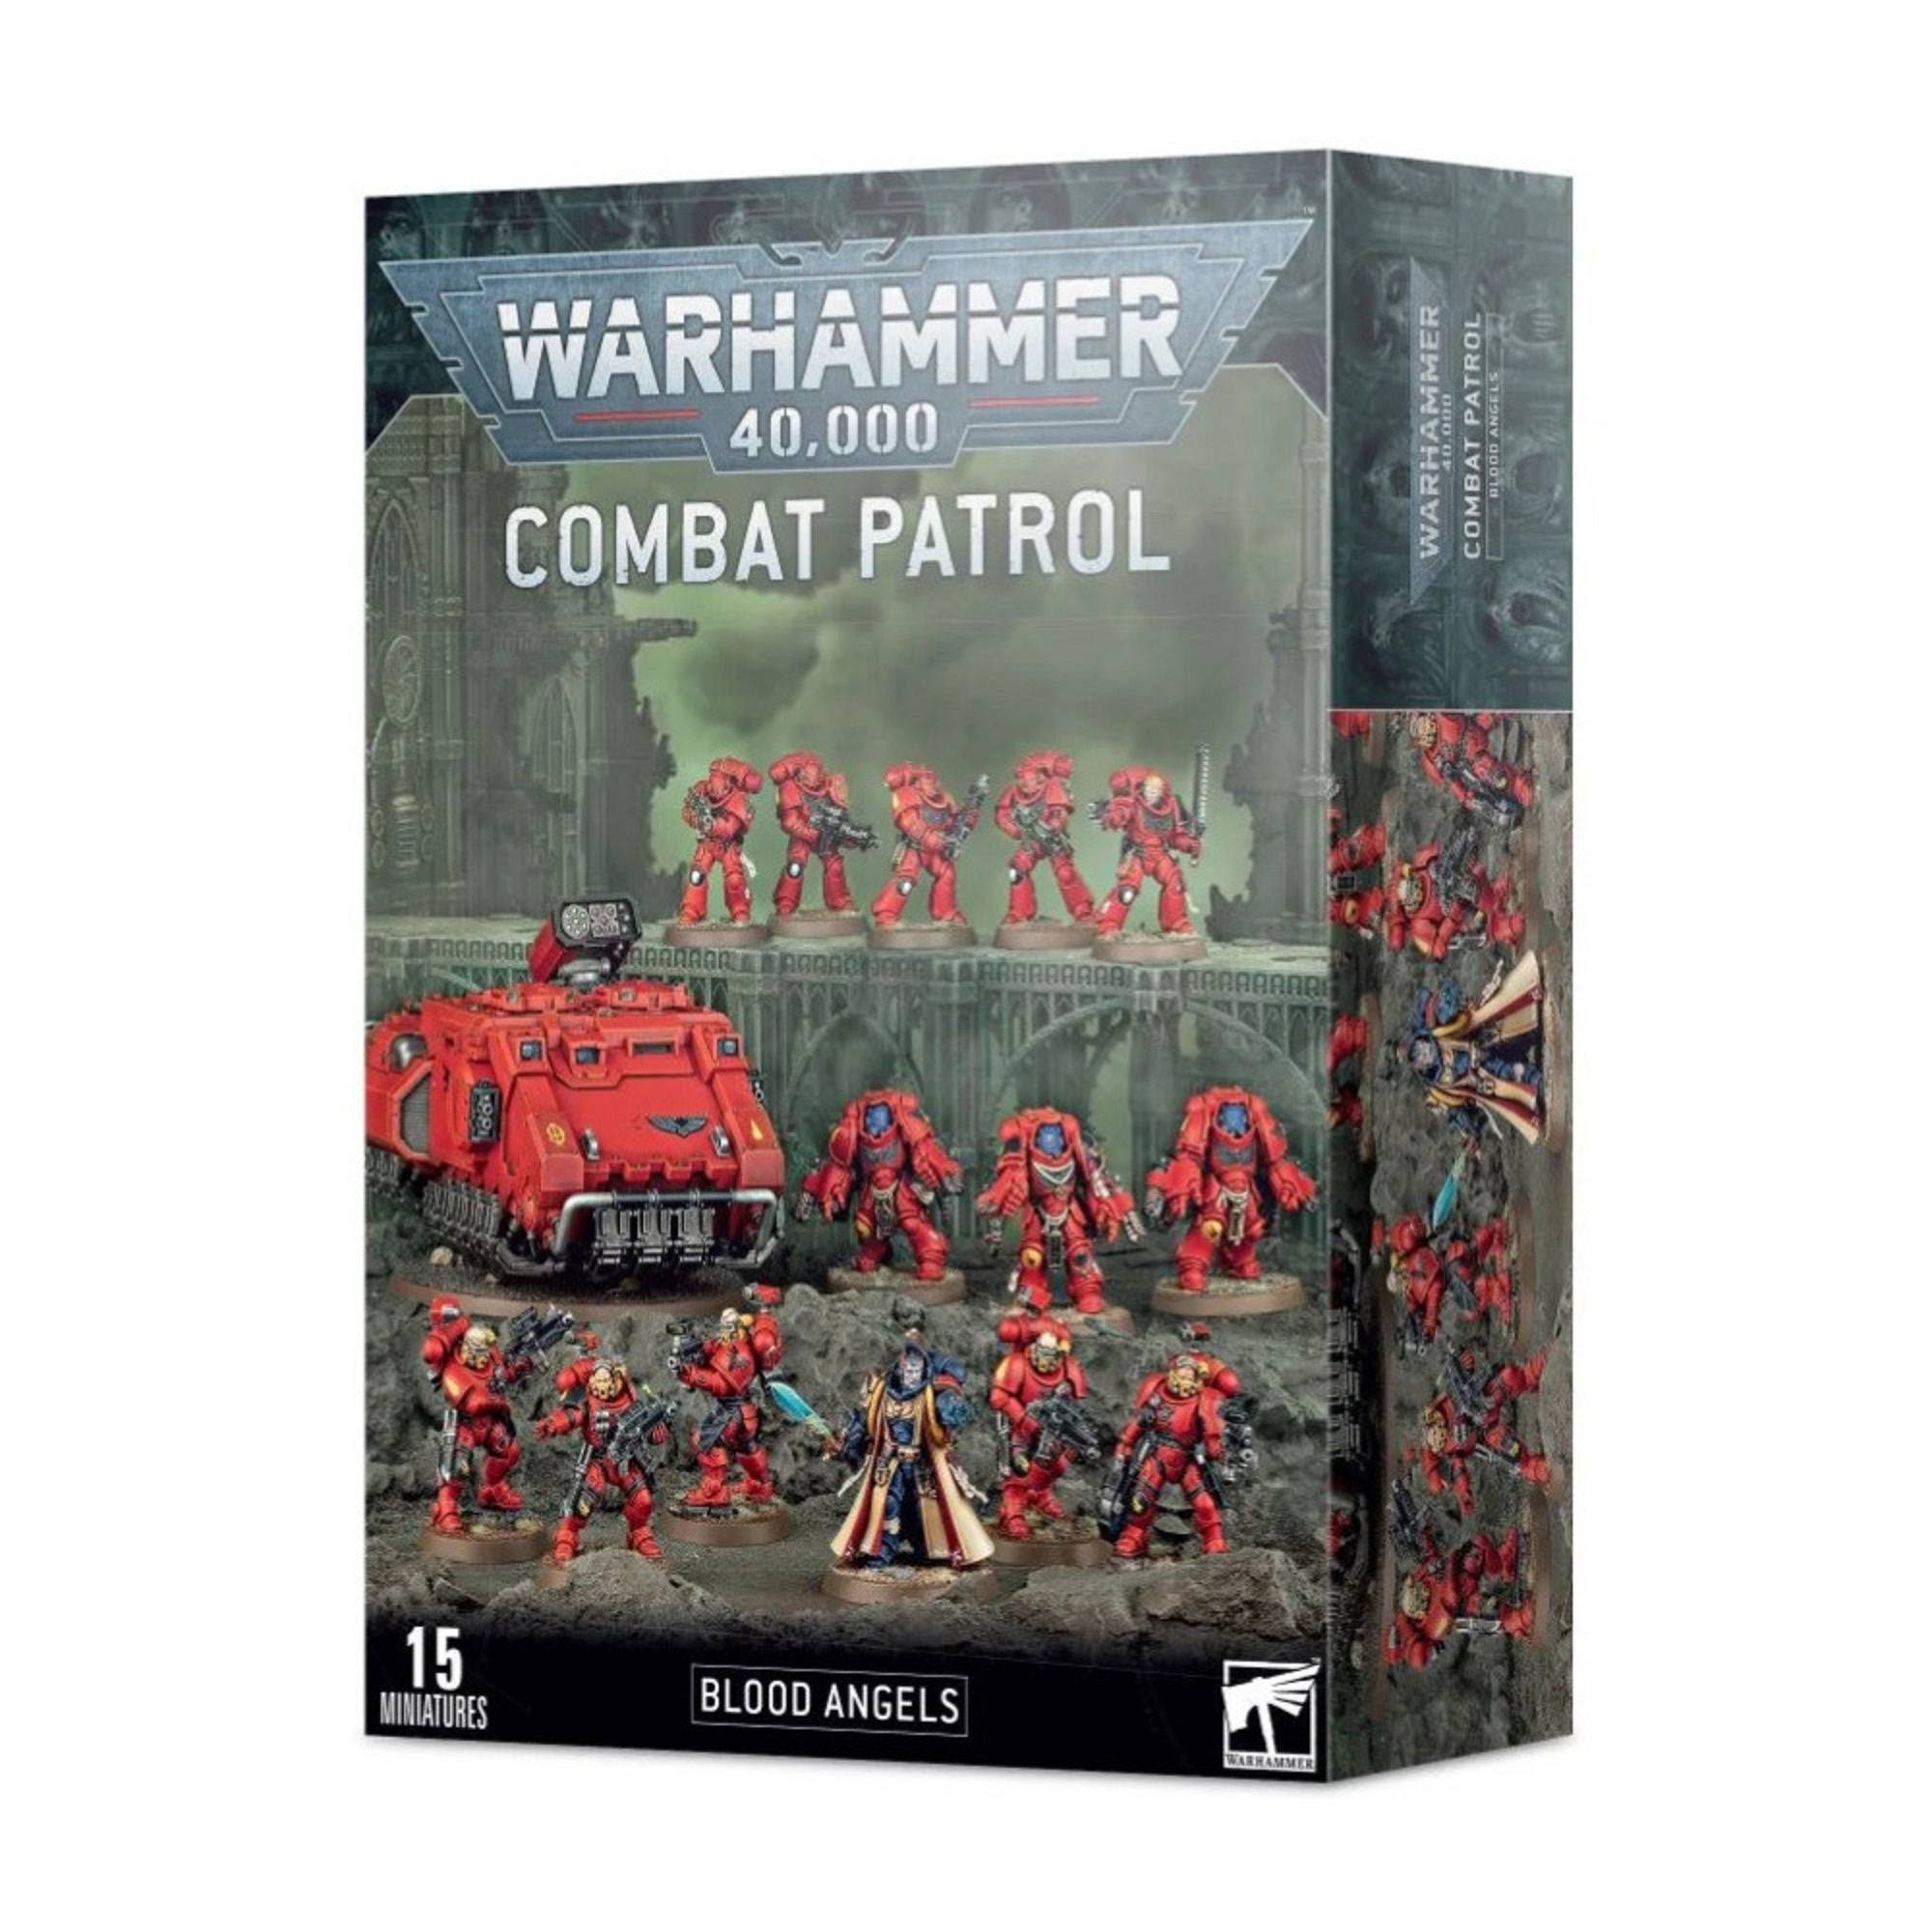 Warhammer 40K Combat Patrol Blood Angels